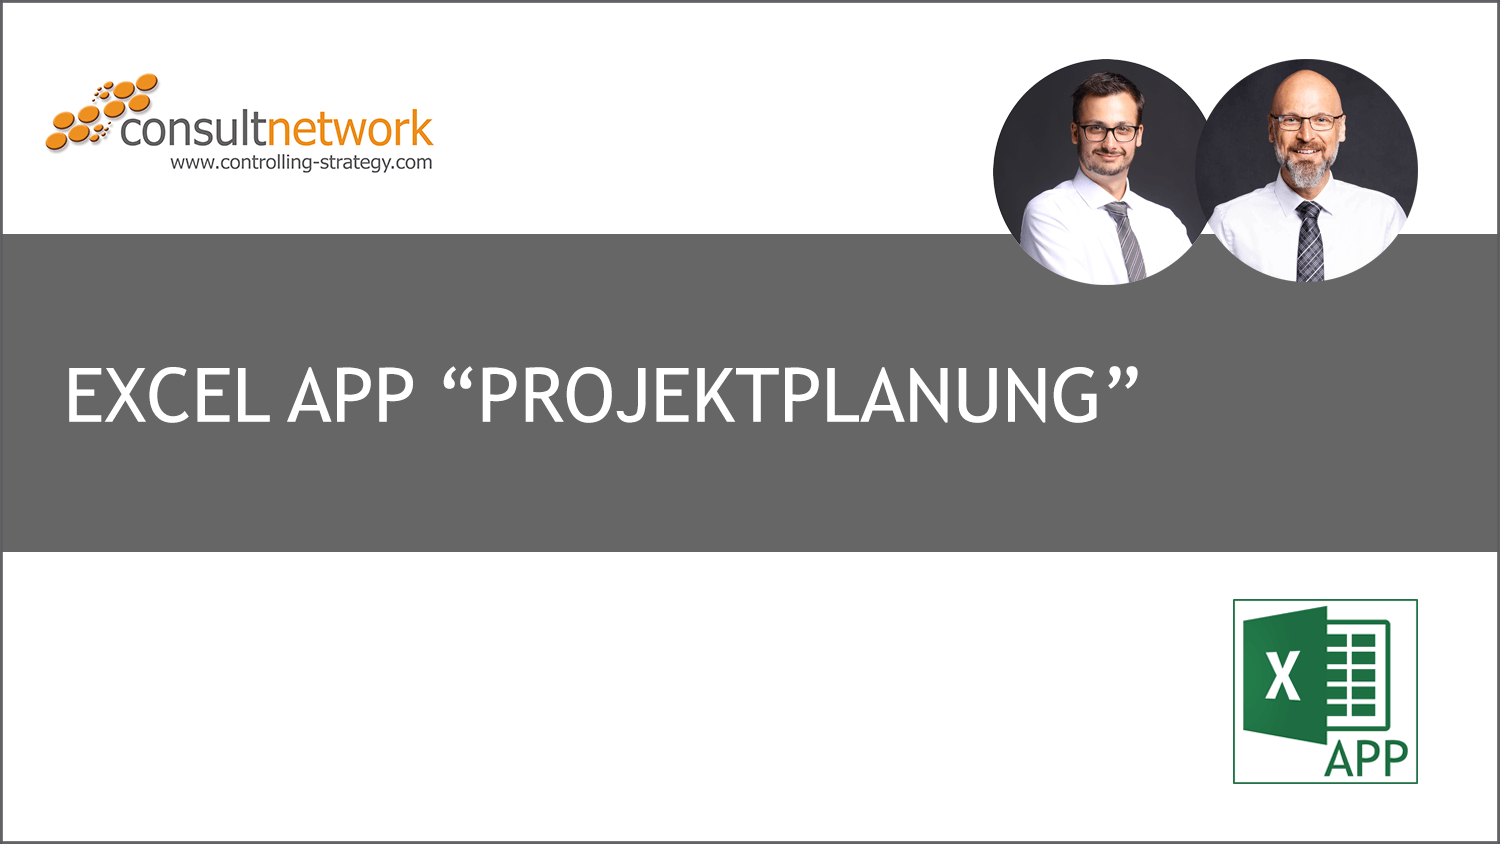 Webinaraufzeichnung: Excel APP "Projektplanung"